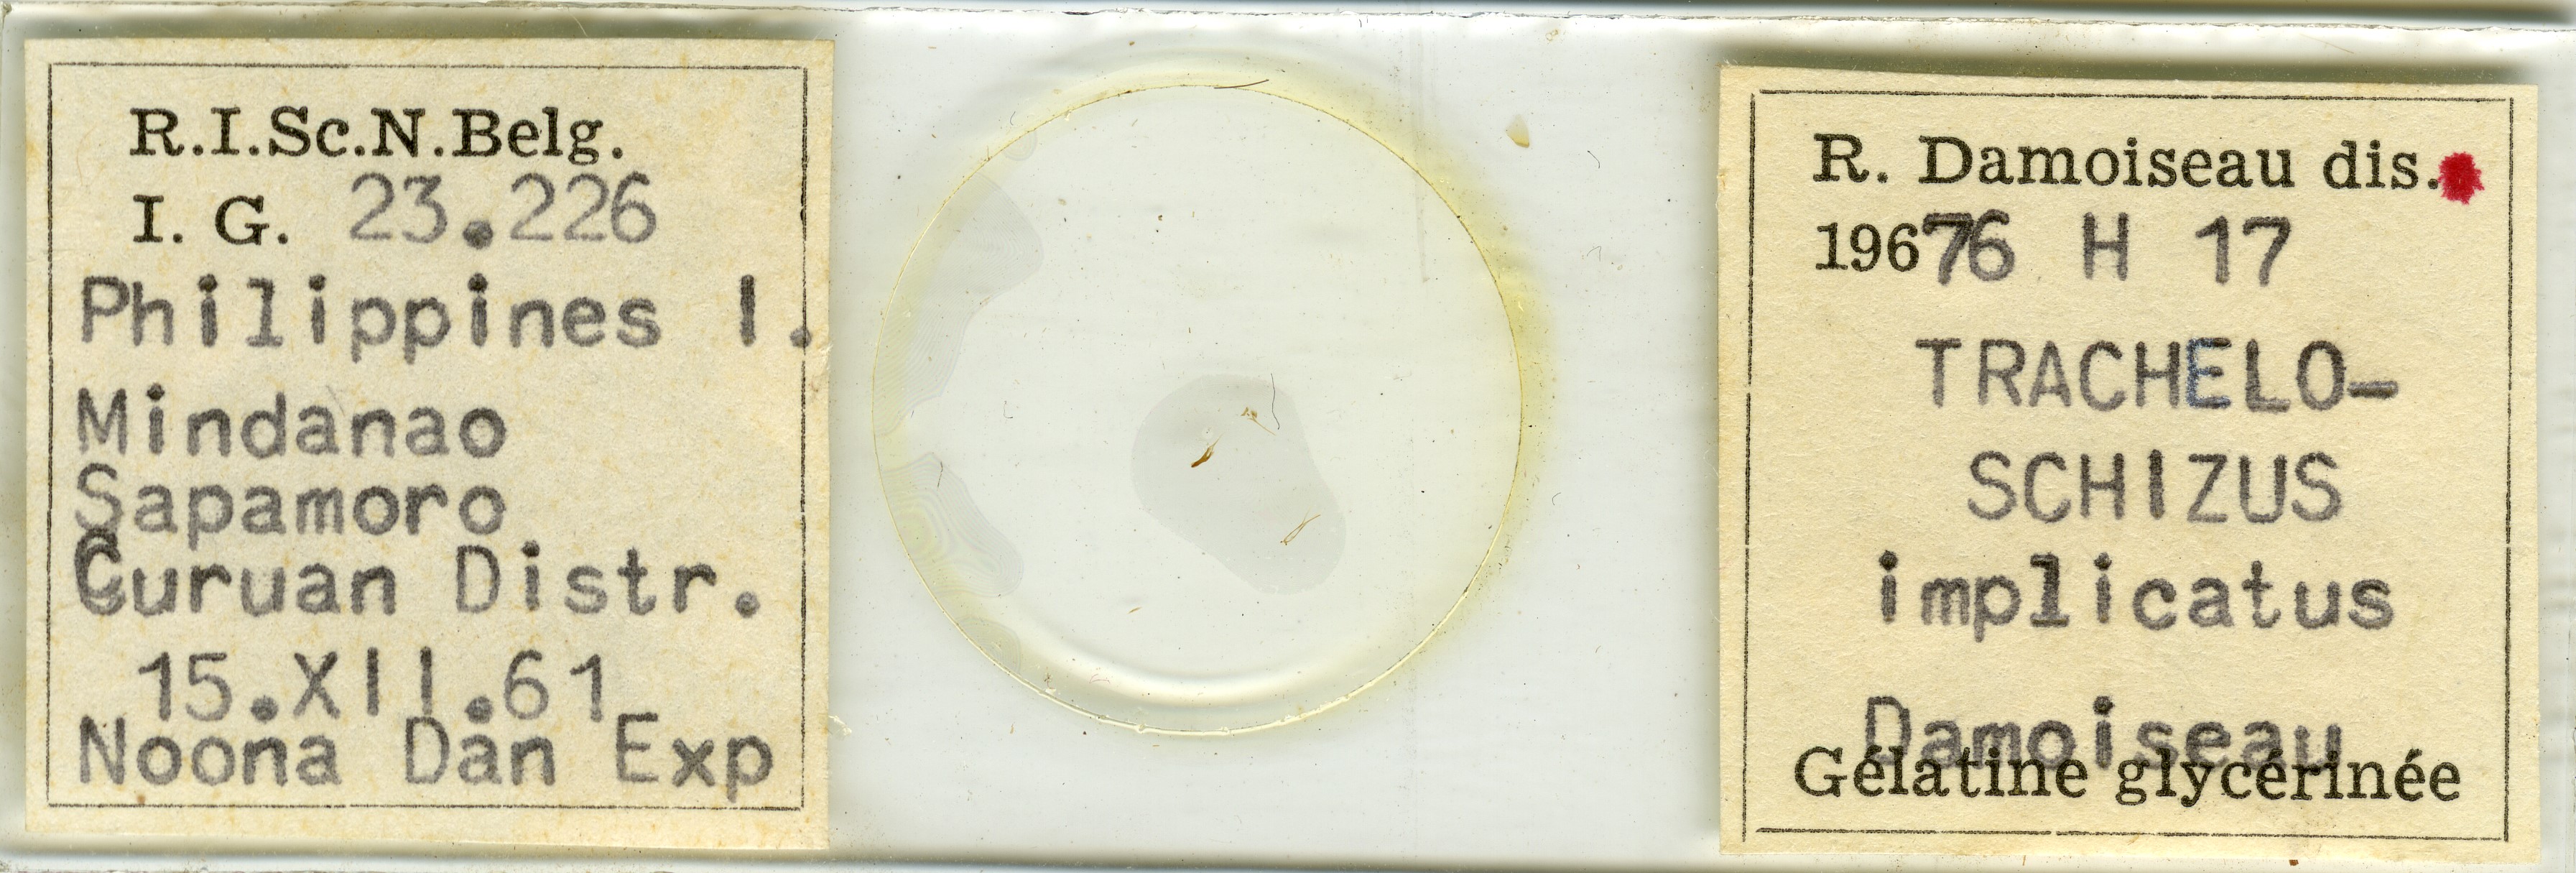 Tracheloschizus implicatus pt Microscopic preparation.jpg